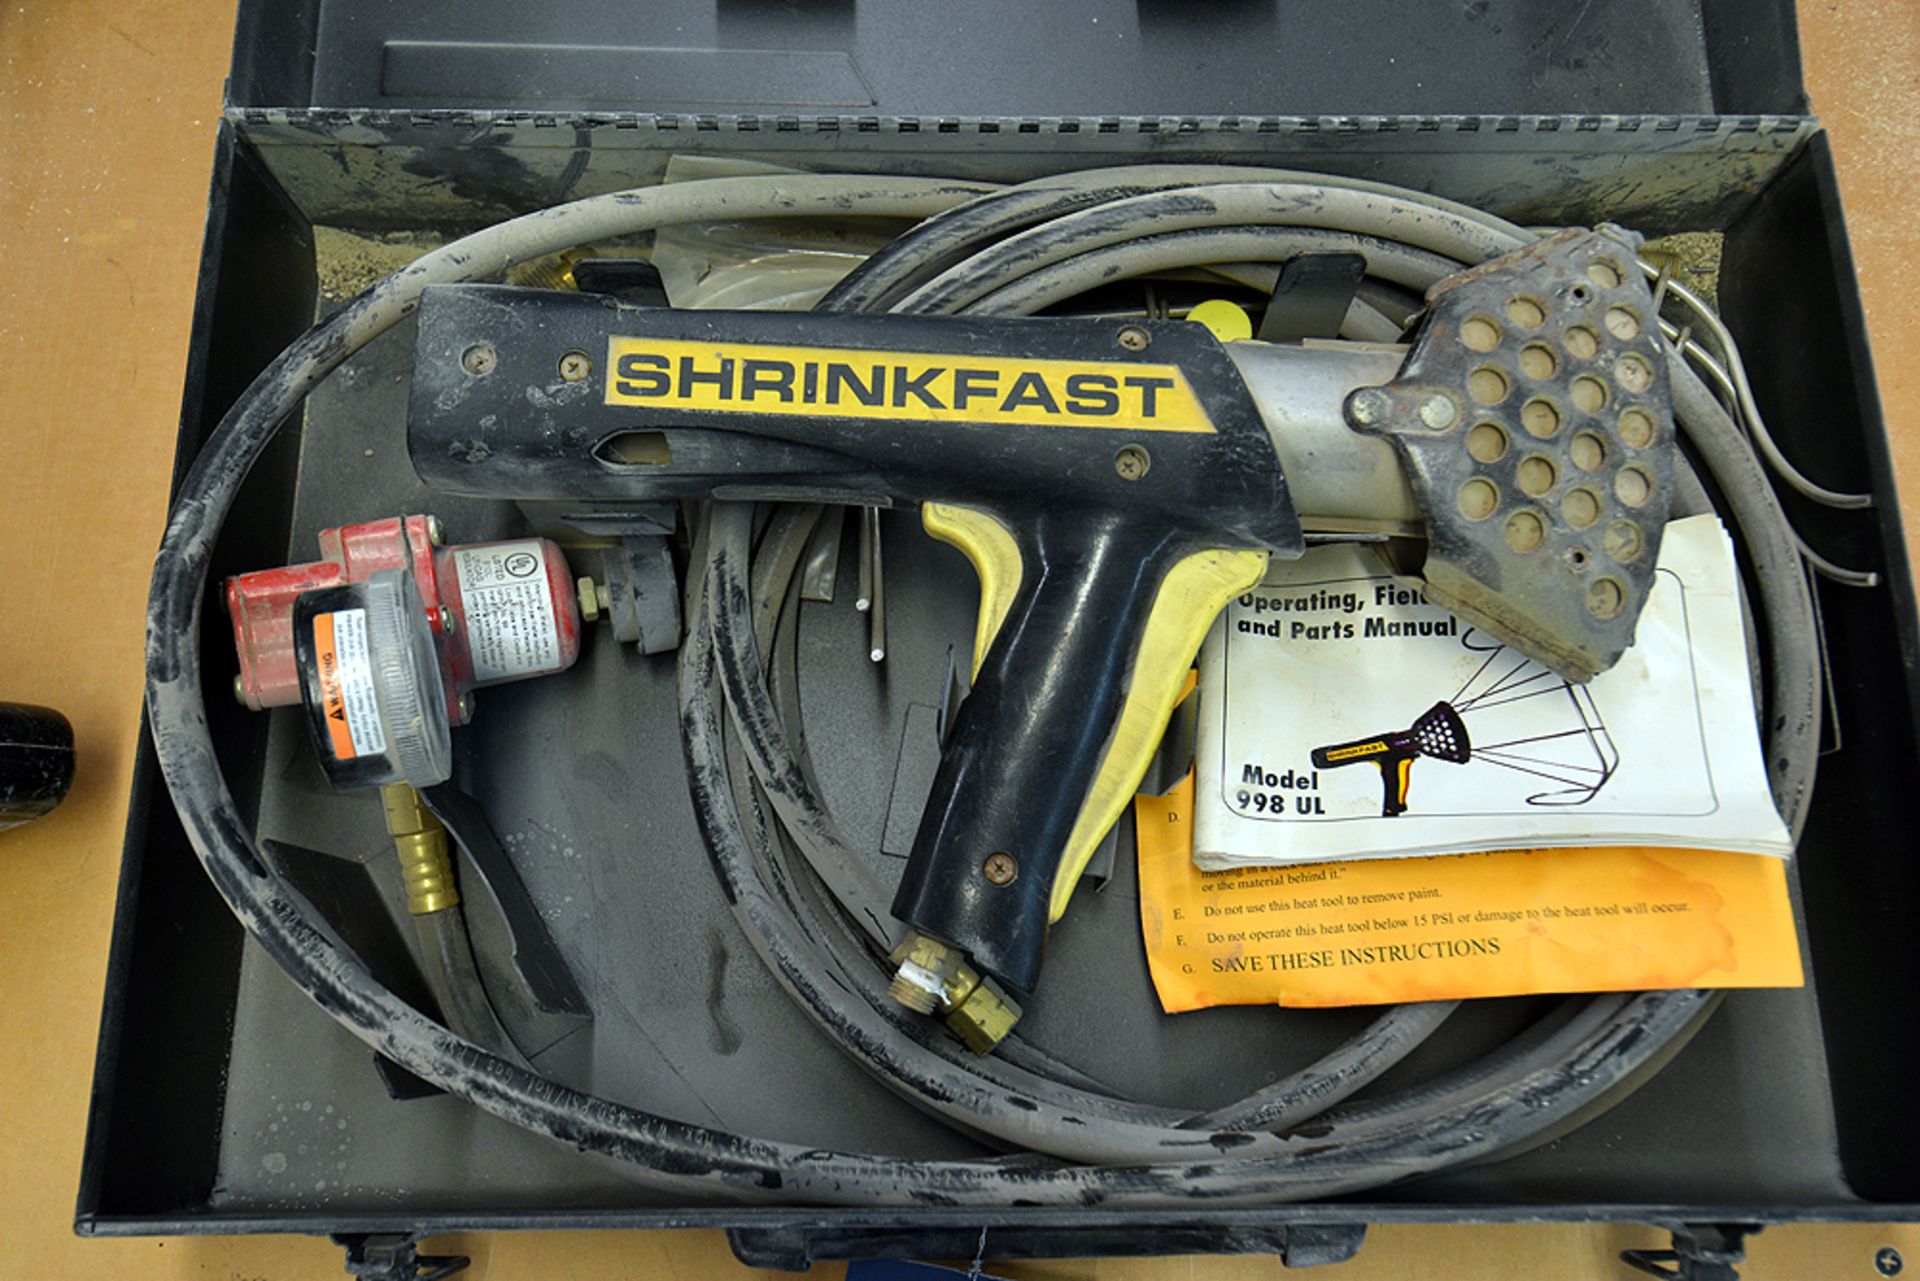 Shrinkfast 998 Heat Gun propane 200,000 BTU